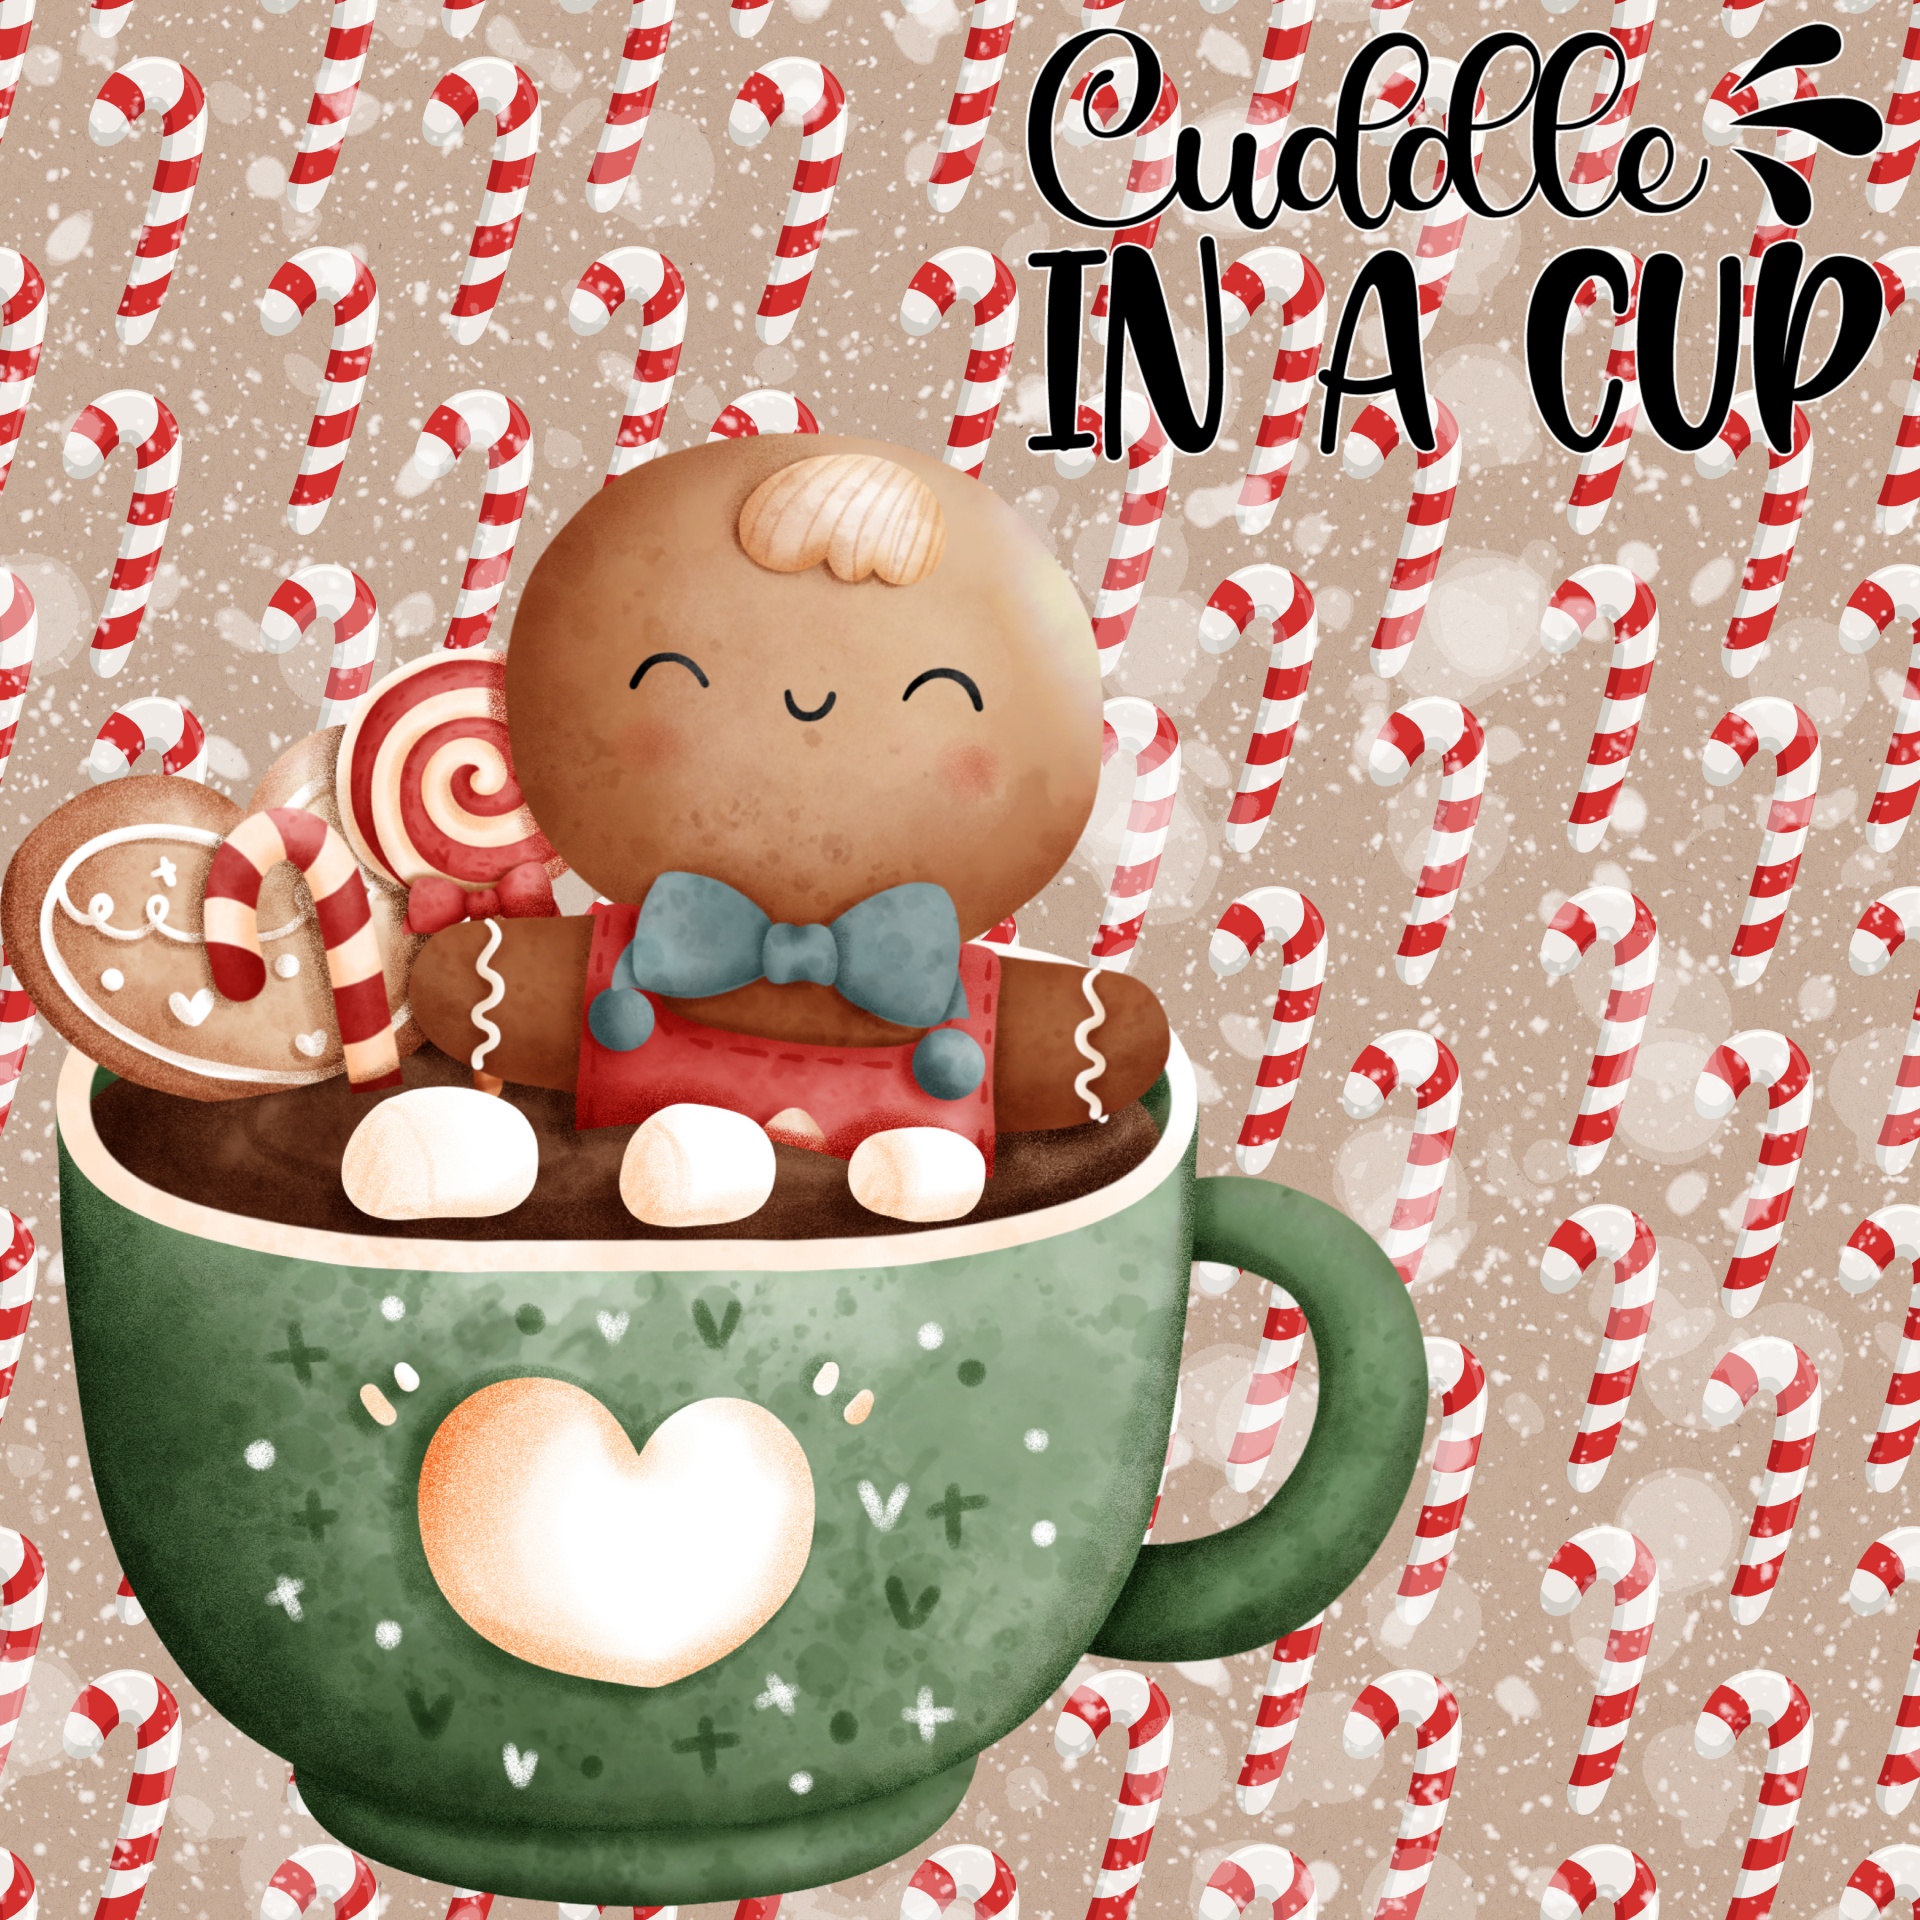 Cuddle In A Cup Gingerbread Boy